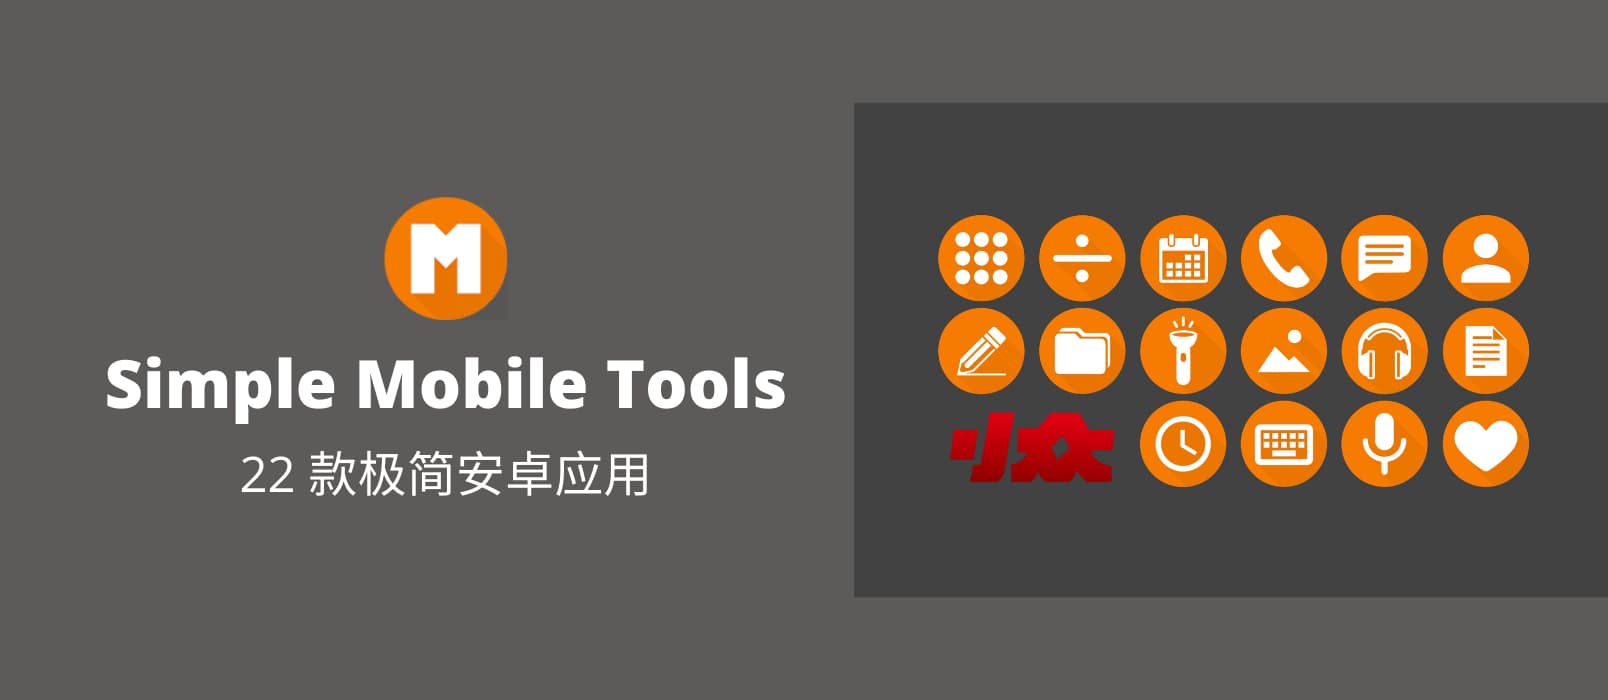 Simple Mobile Tools 的 22 款极简安卓应用